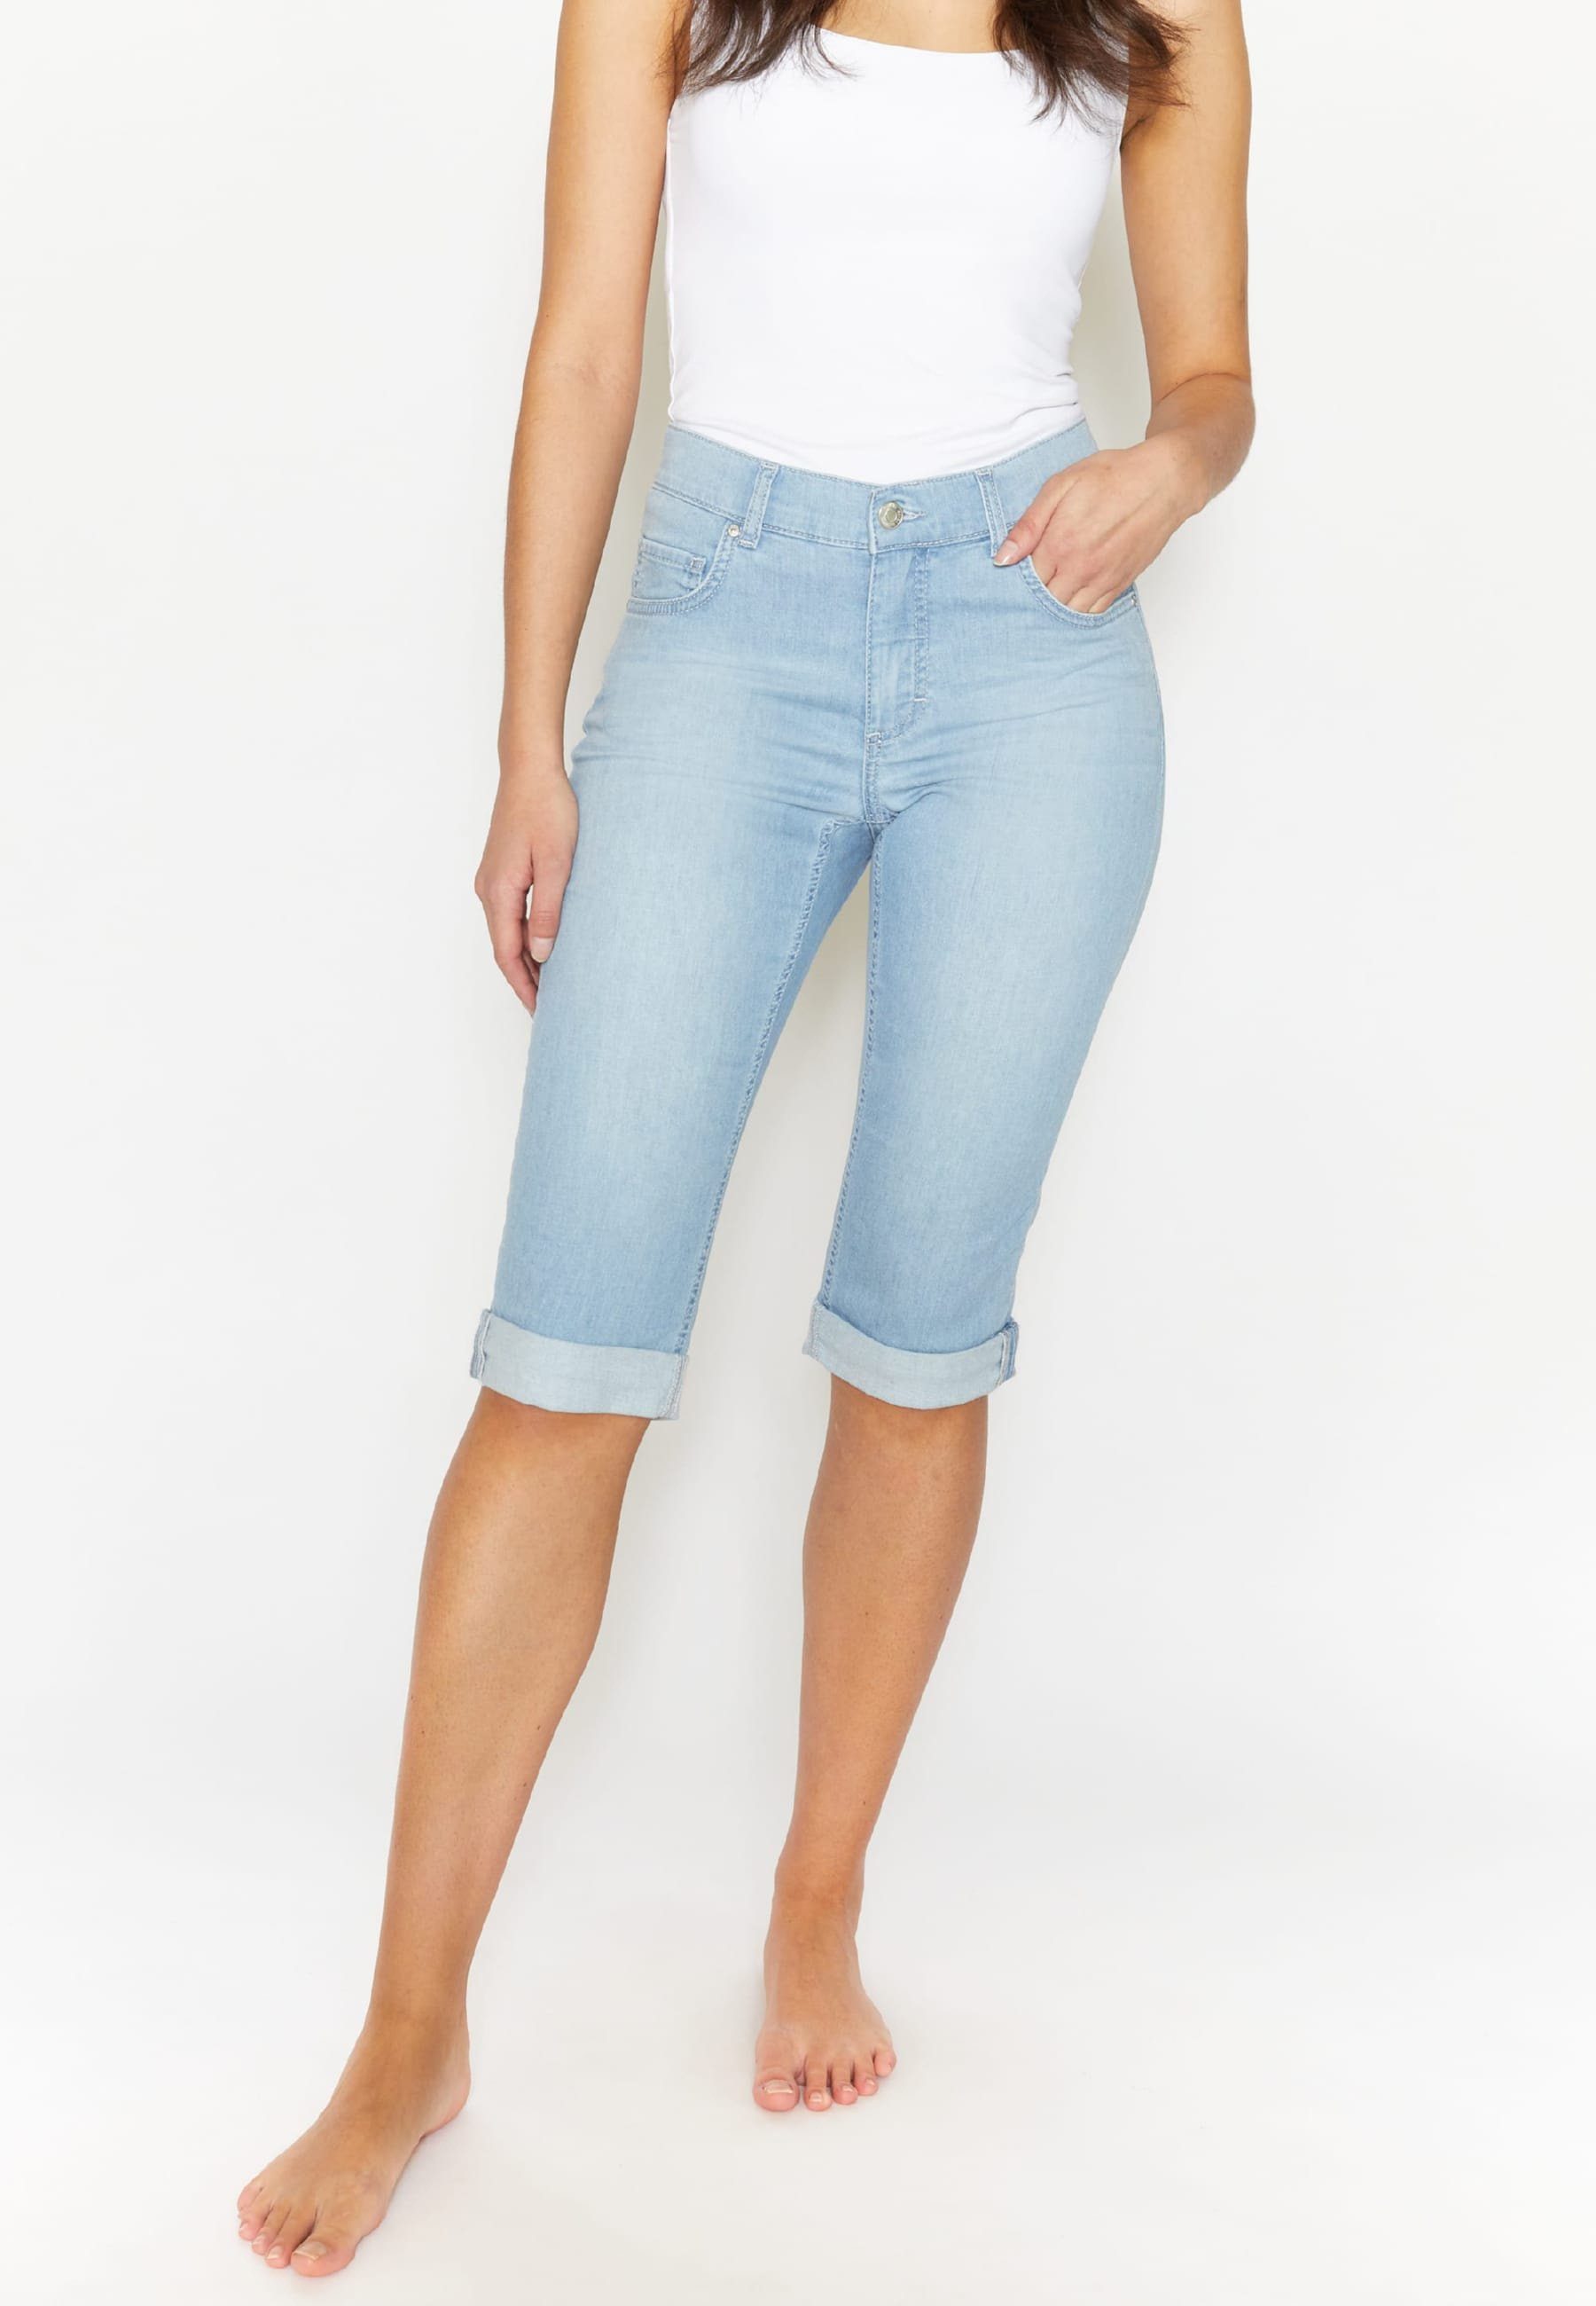 ANGELS Jeans Used-Look hellblau mit 5-Pocket-Jeans Capri Label-Applikationen TU mit